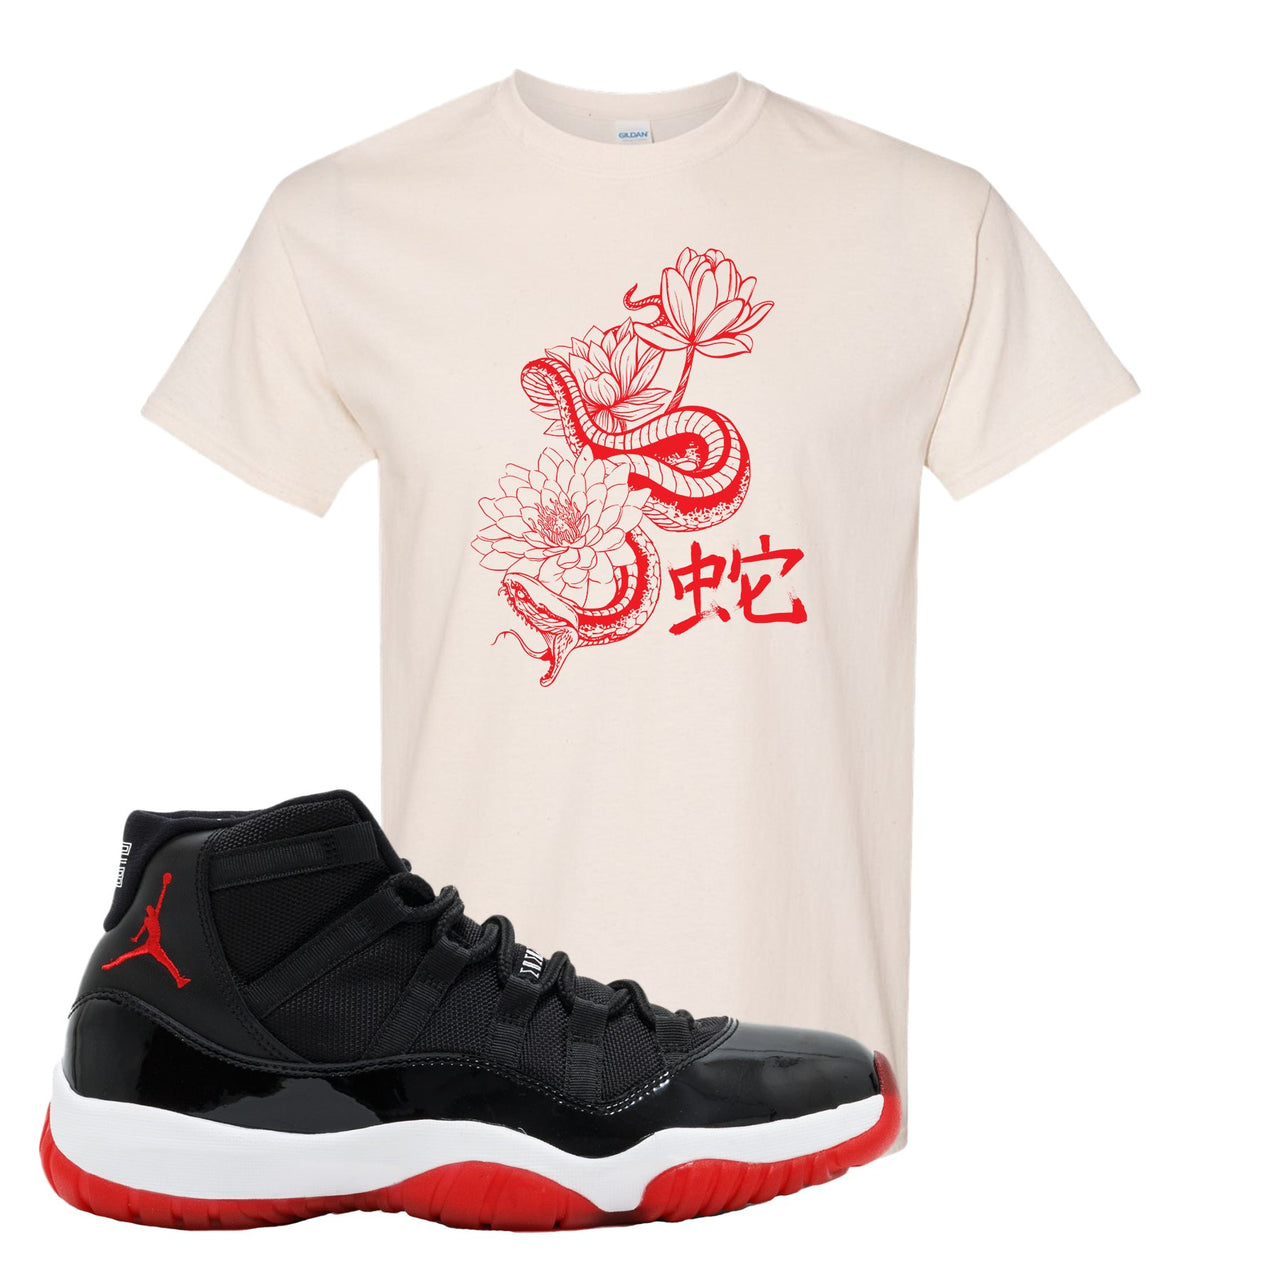 Jordan 11 Bred Snake Lotus White Sneaker Hook Up T-Shirt